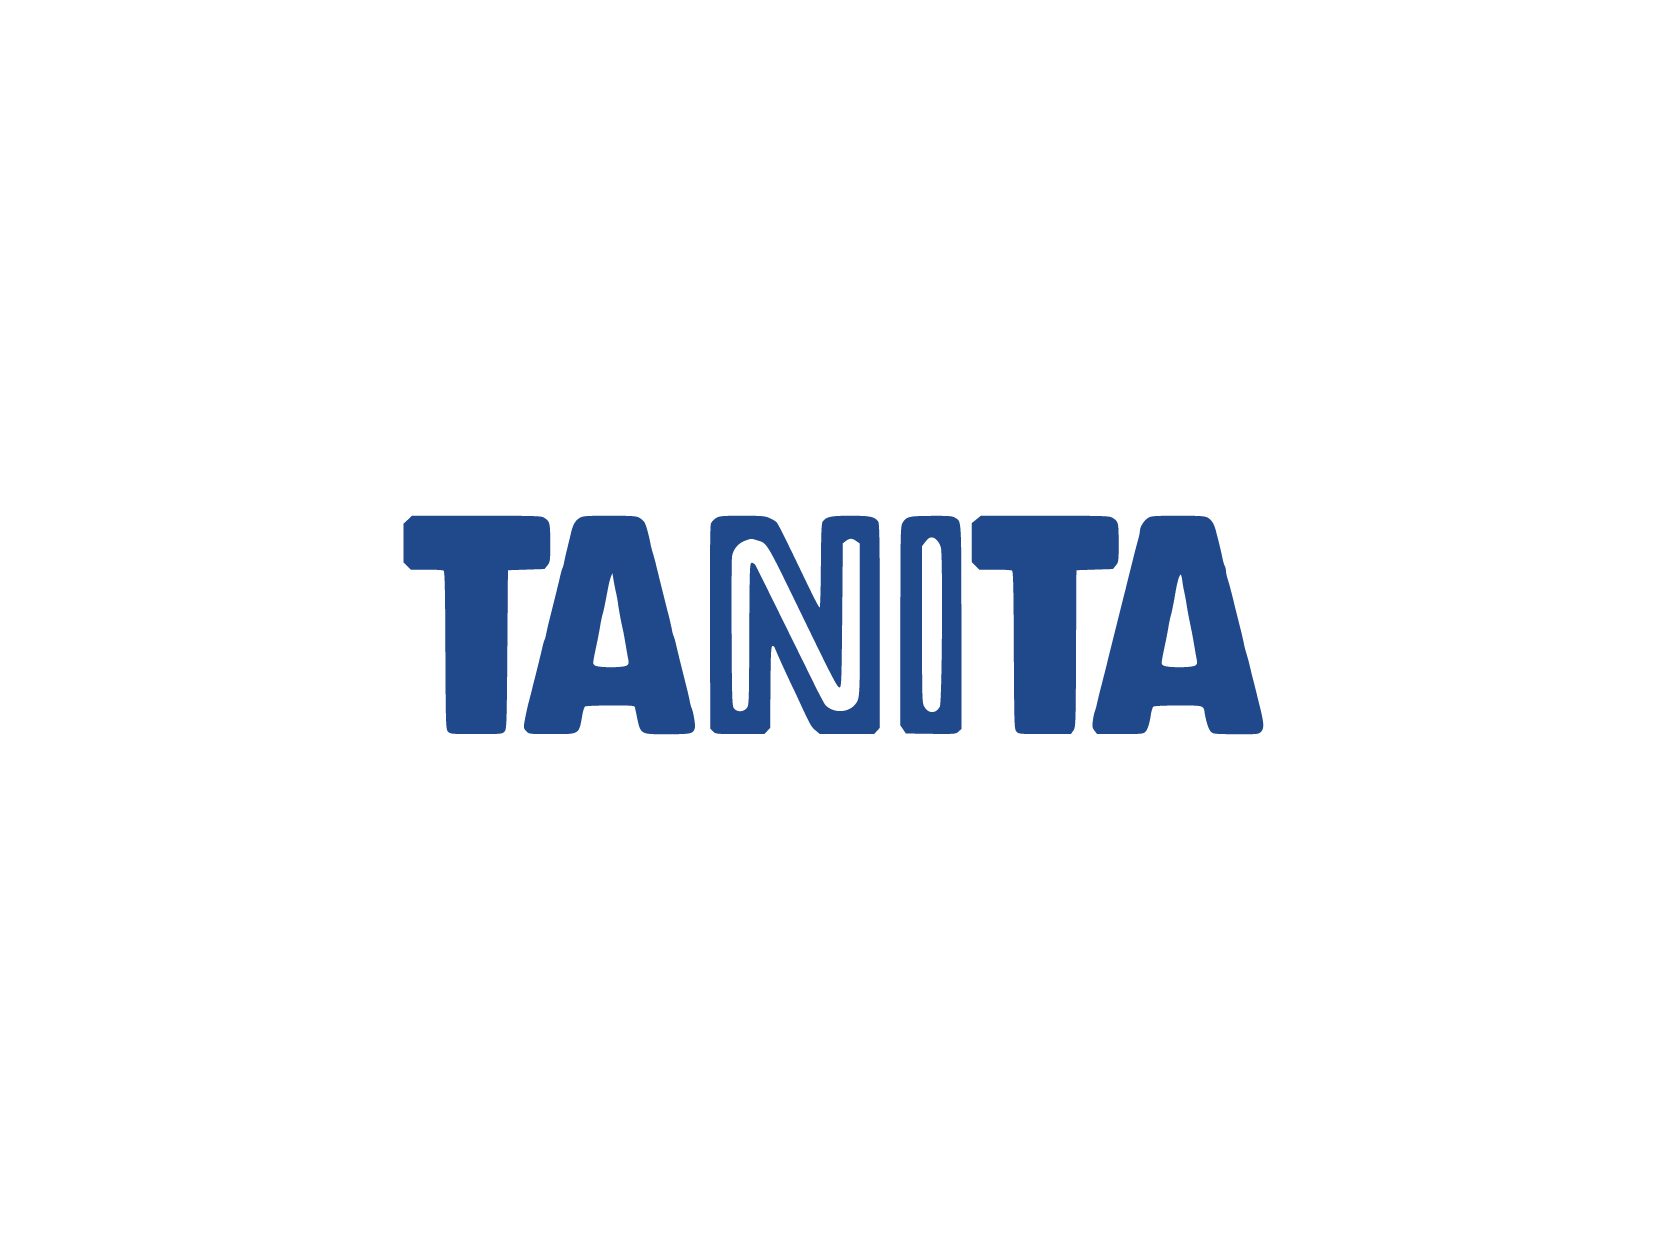 TANITA百利达标志矢量图